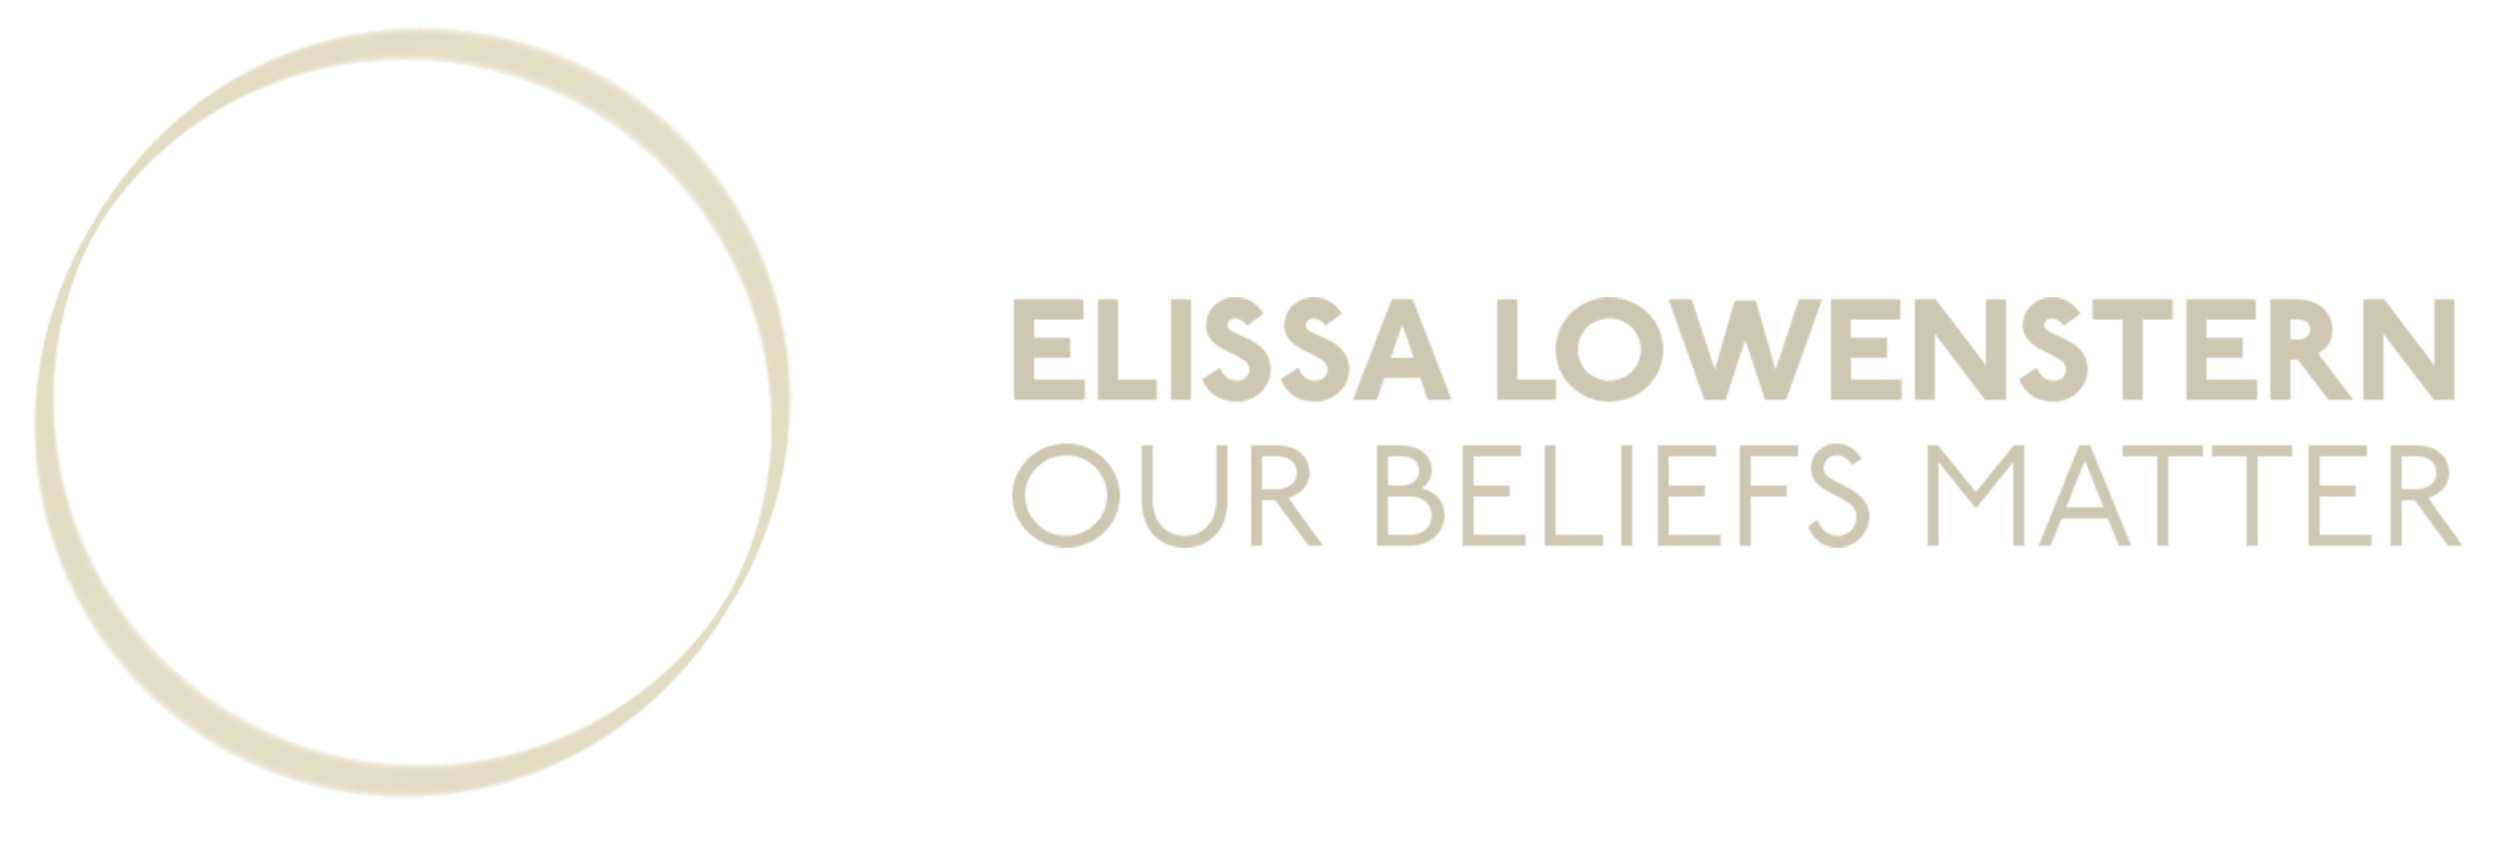 Elissa Lowenstern